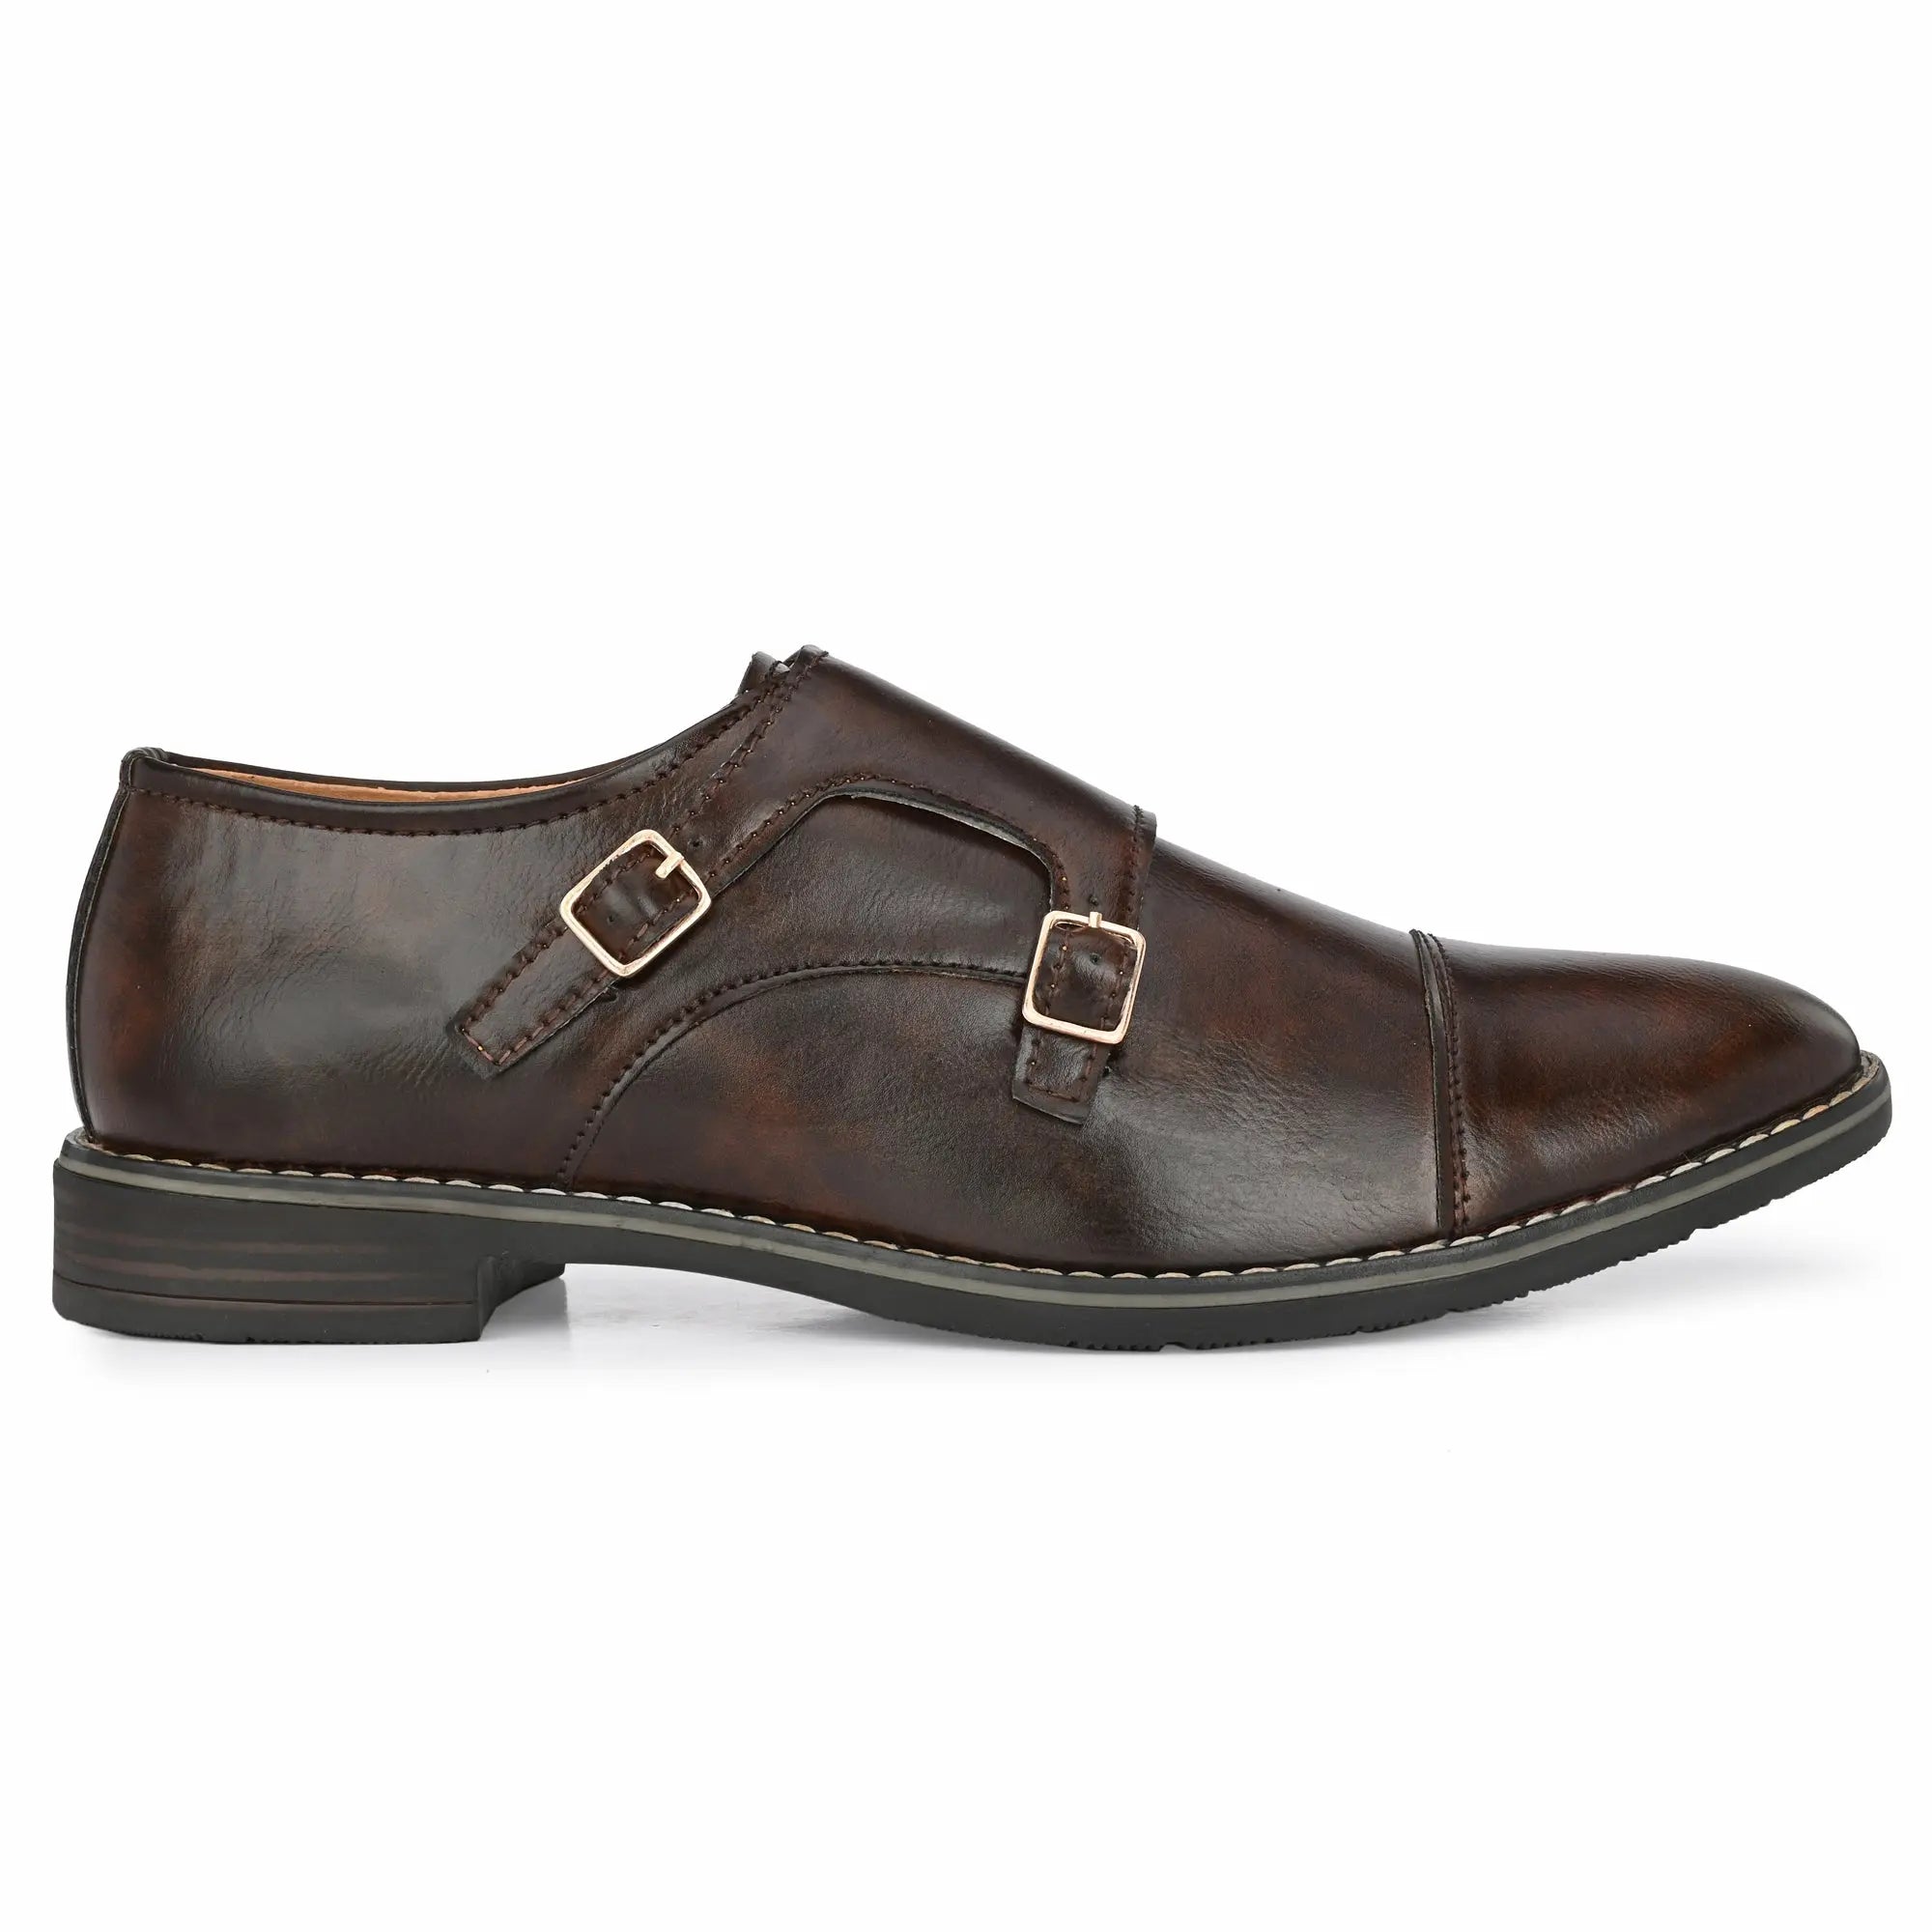 brown-double-monk-strap-attitudist-shoes-for-men-with-buckle-sp4b